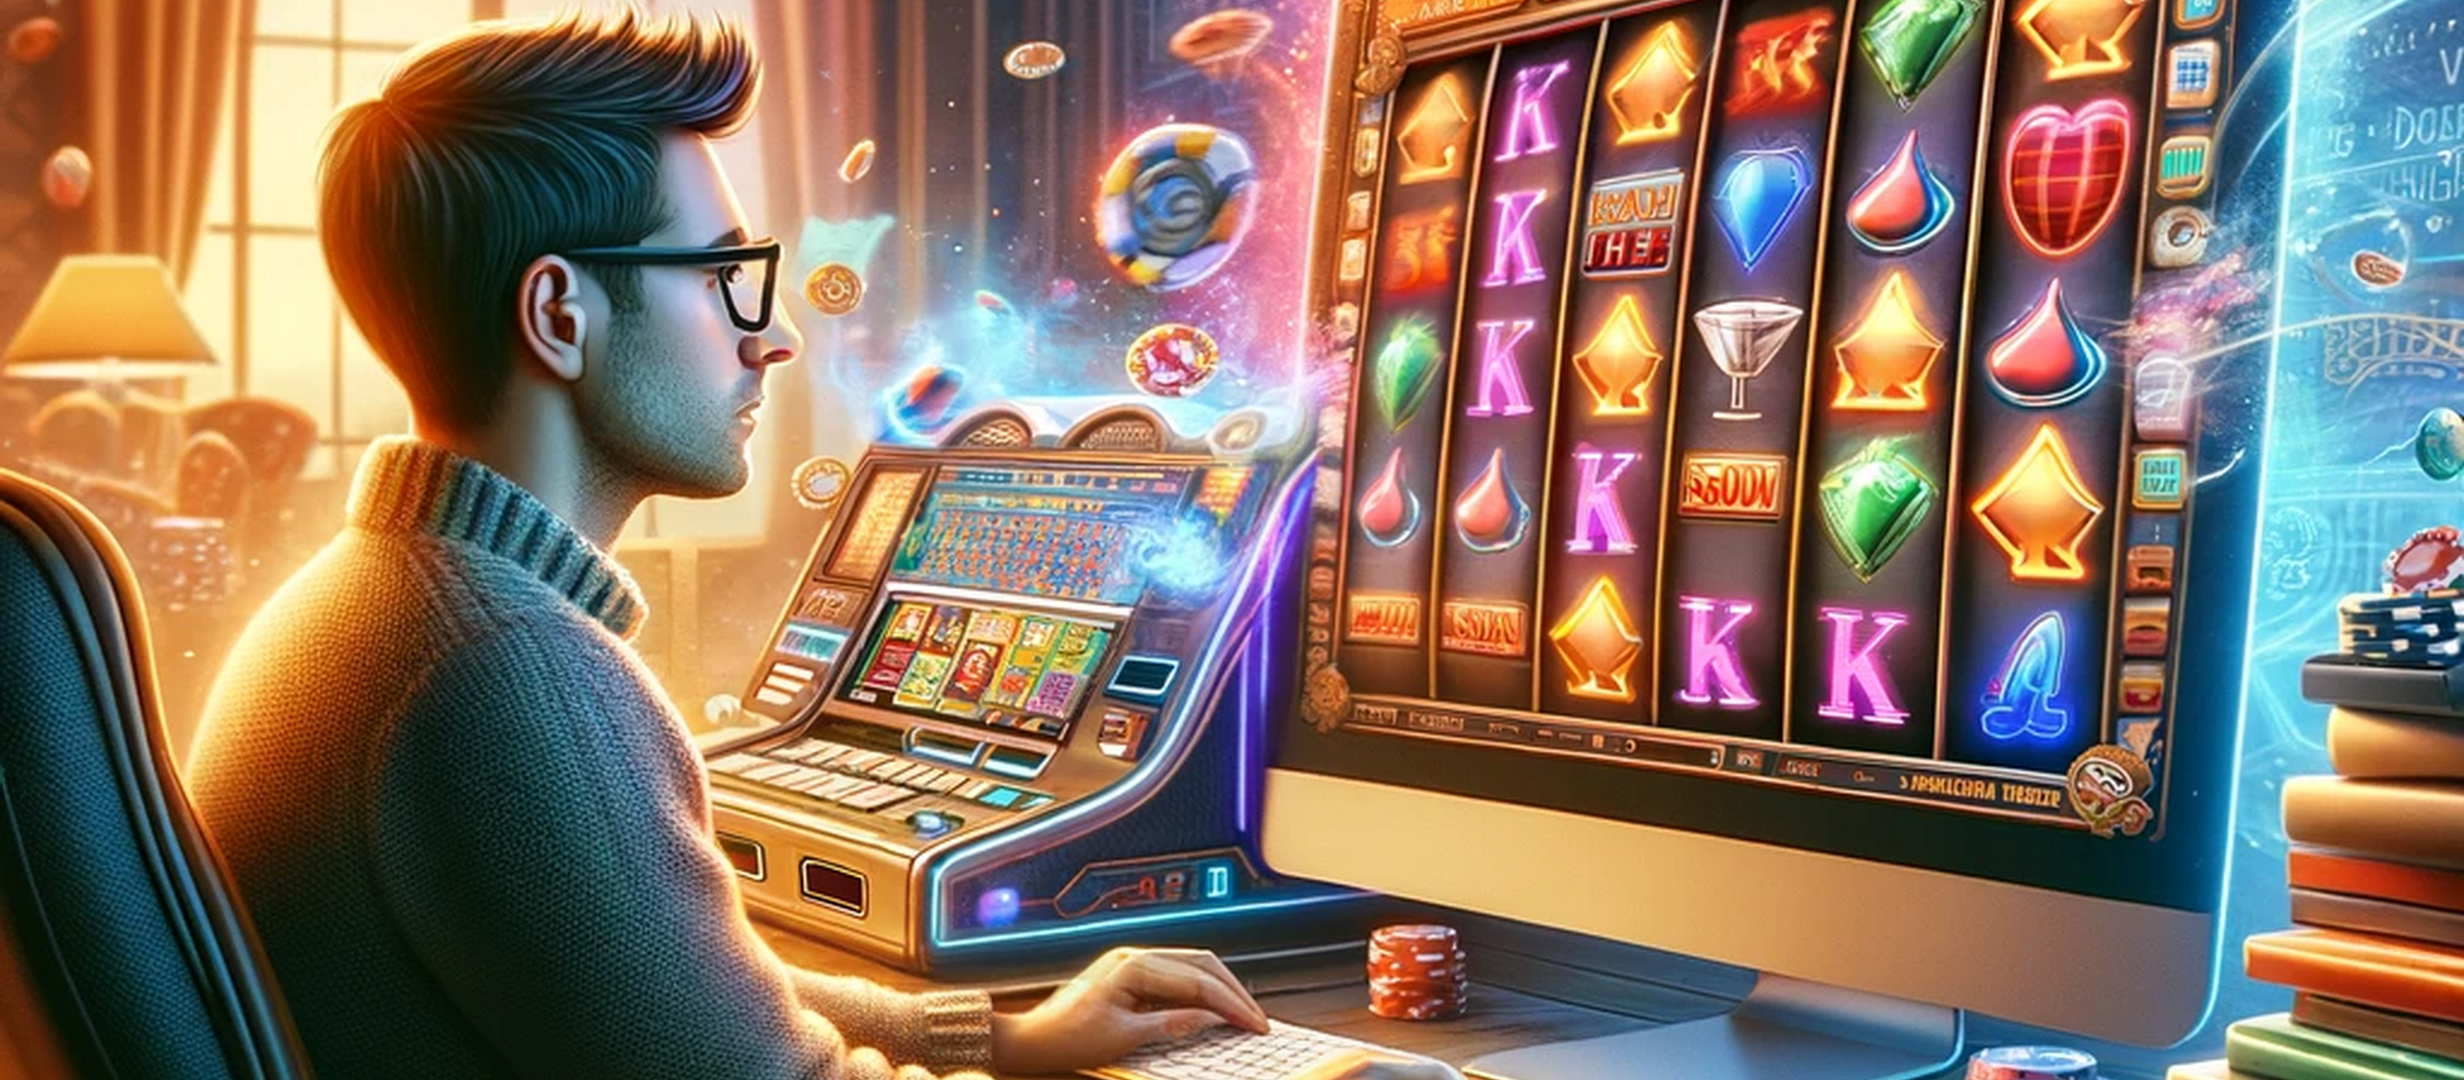 Secretul Sloturilor: Cum sa intelegi si sa profiti de slot machines